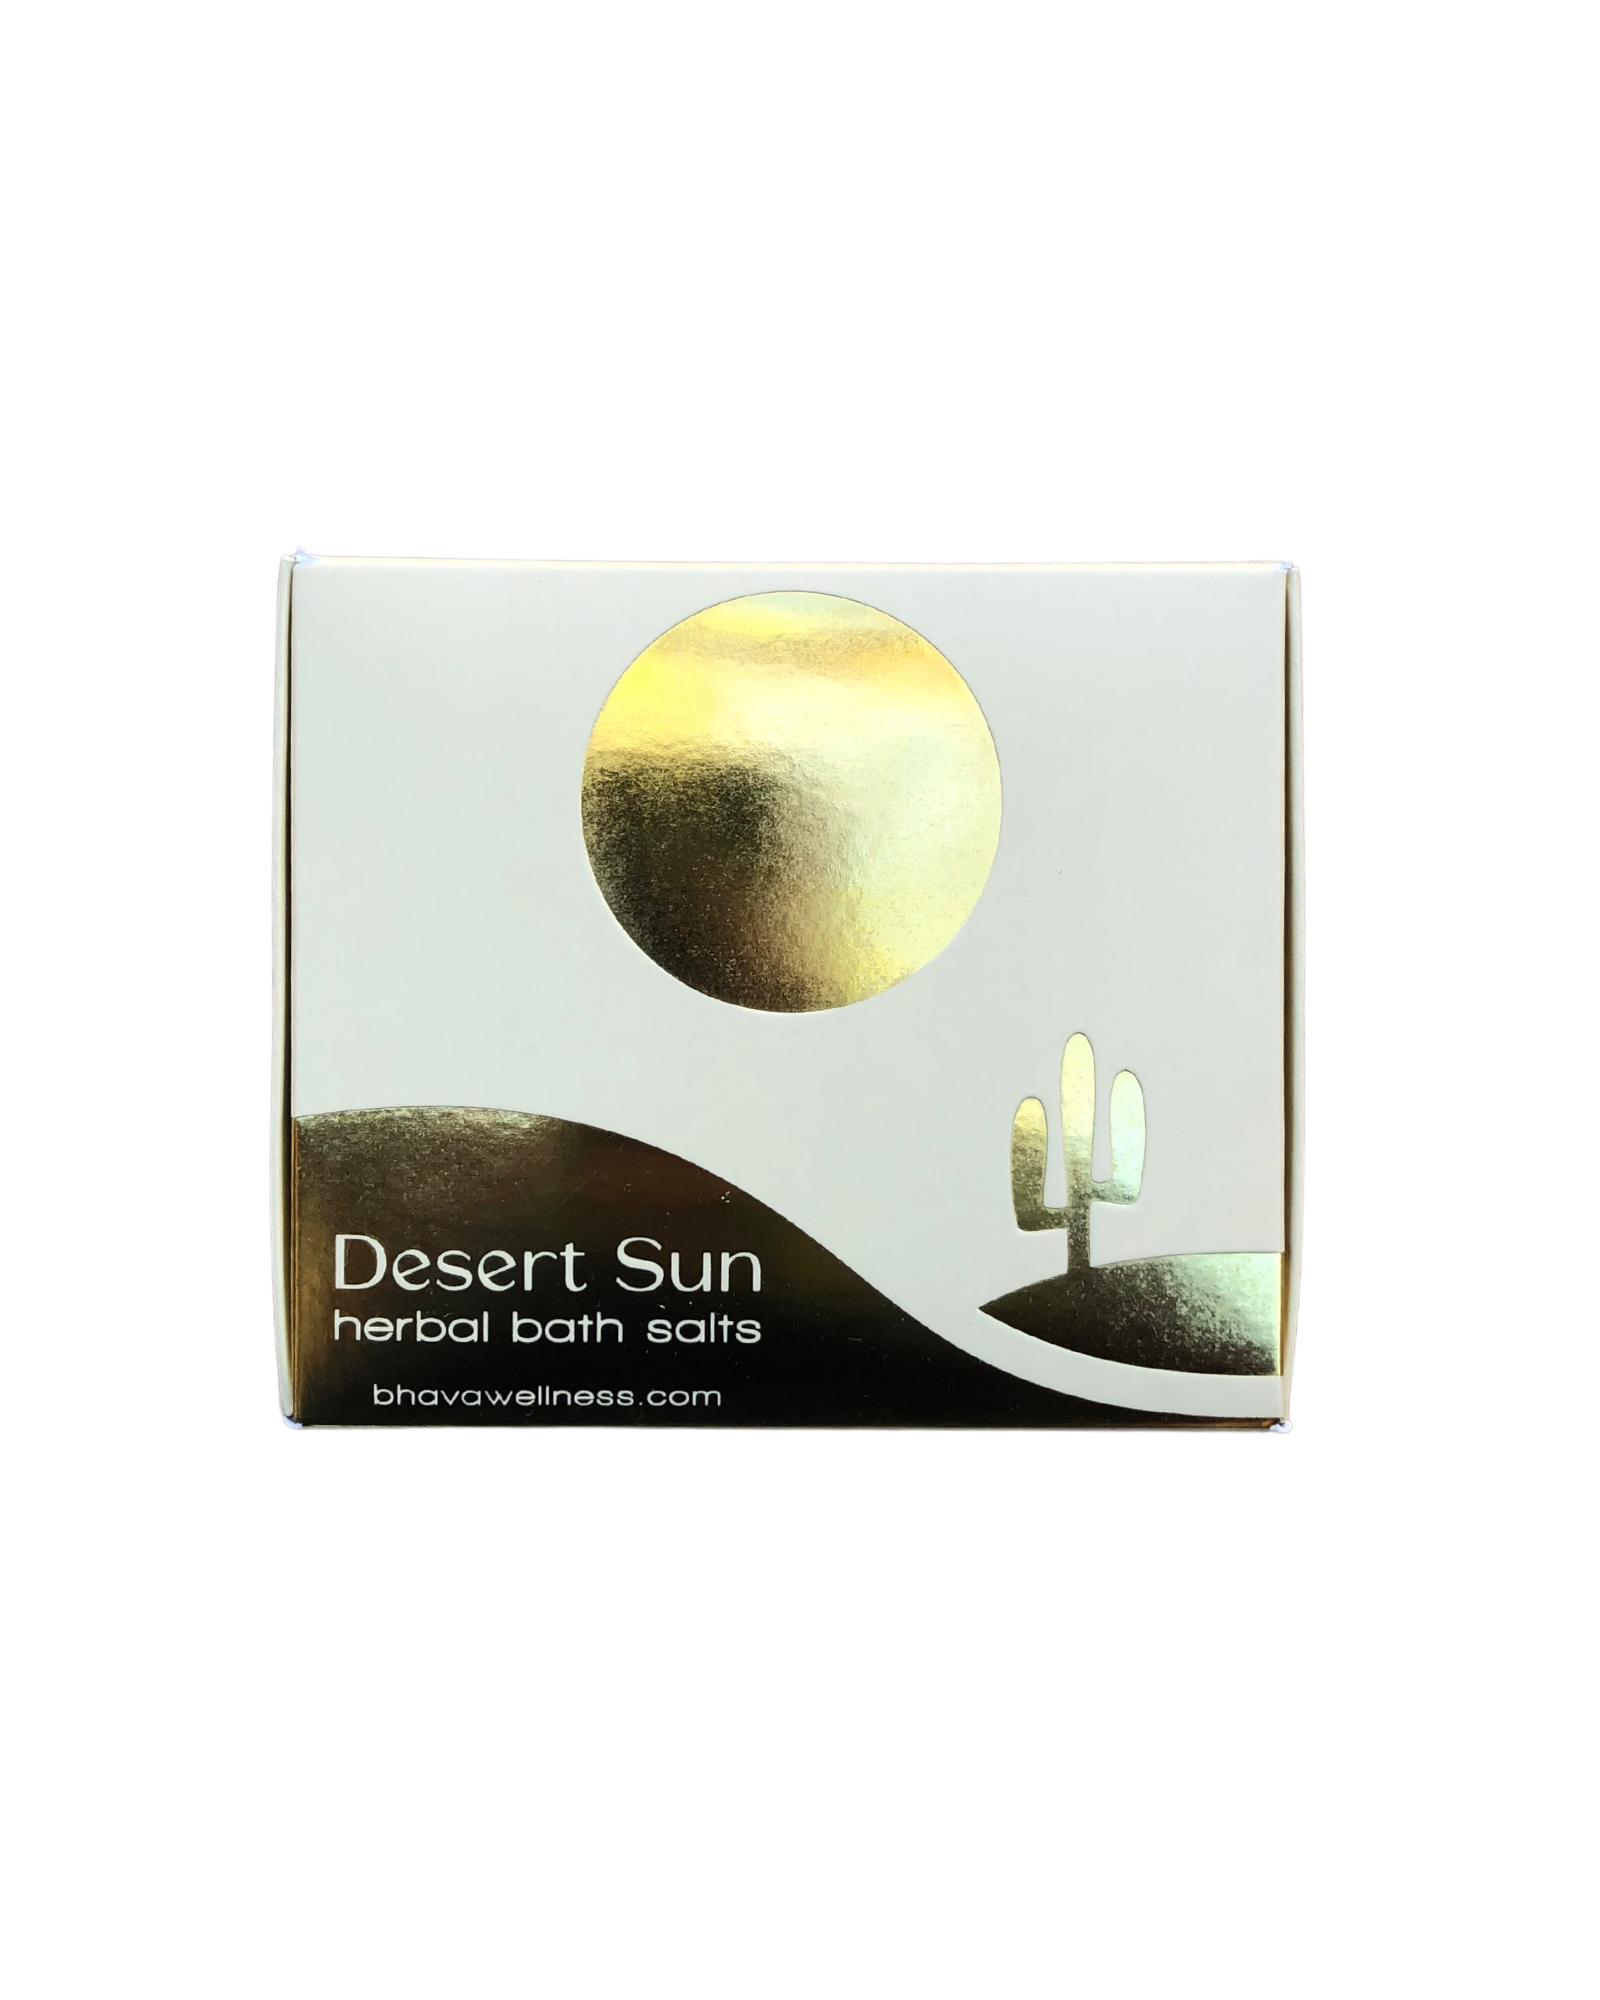 White desert moon soak and scrub box with gold foil details